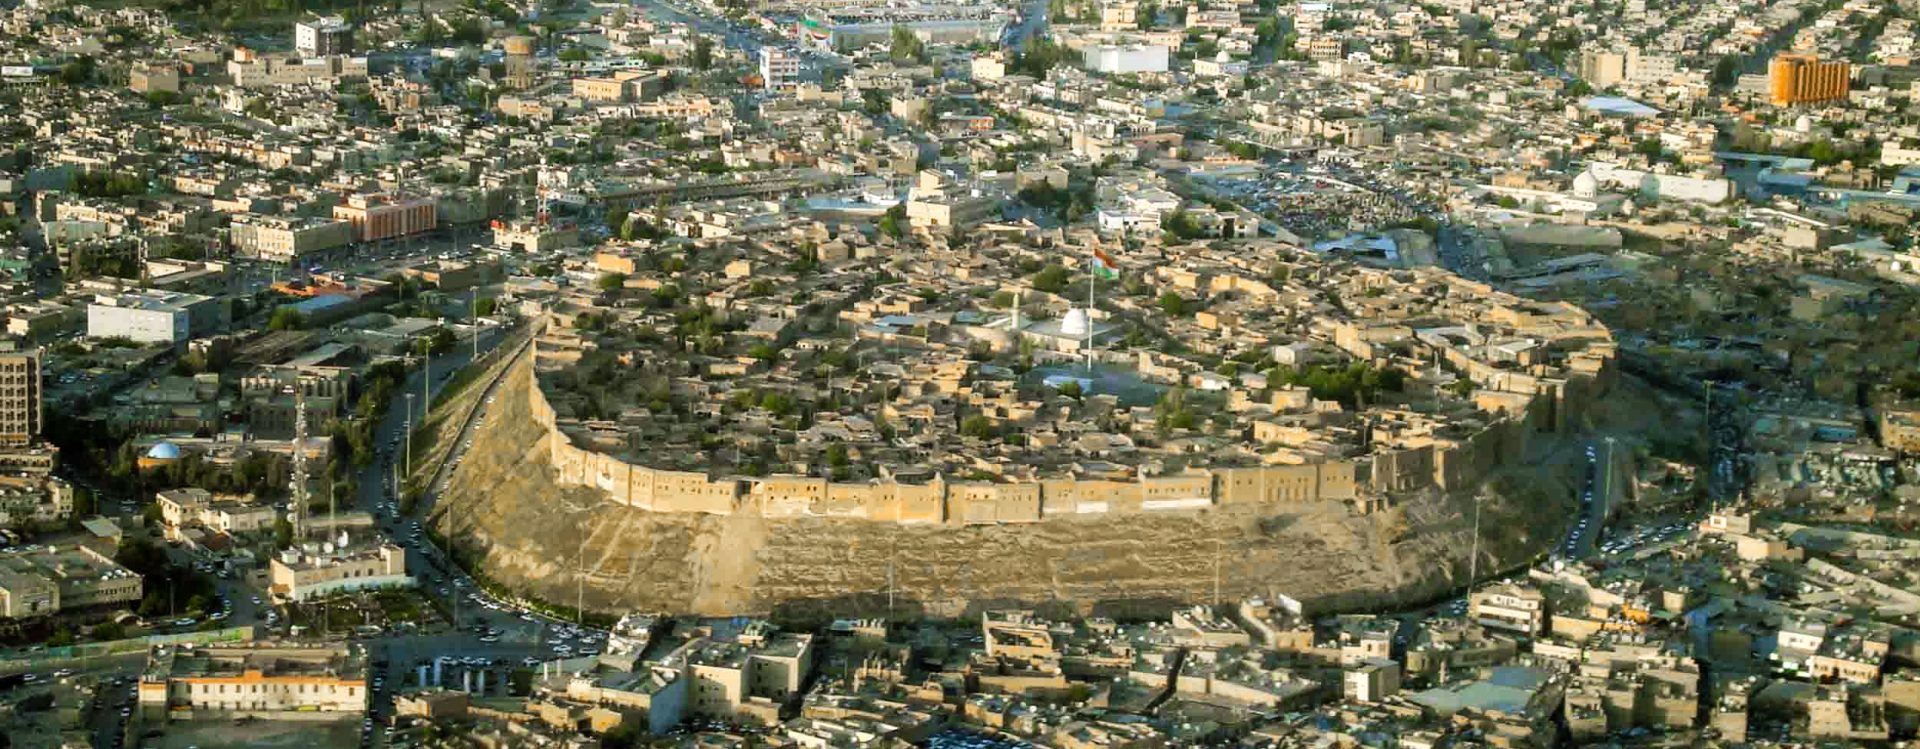 Vue de la ville d'Erbil, au Kurdistan irakien | © Jan Kurdistani/Wikimedia Commons/CC BY-SA 2.0